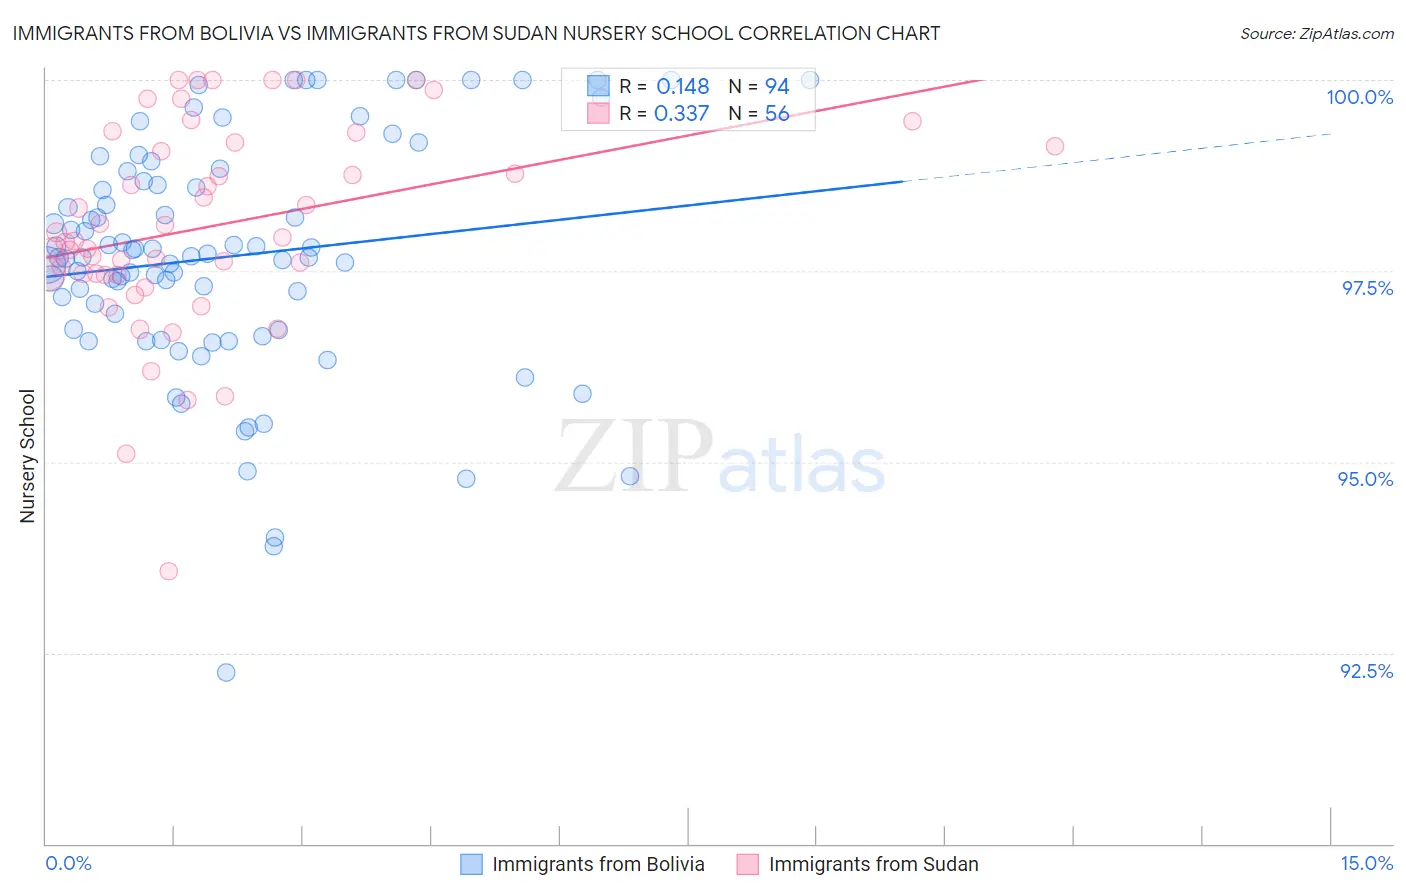 Immigrants from Bolivia vs Immigrants from Sudan Nursery School